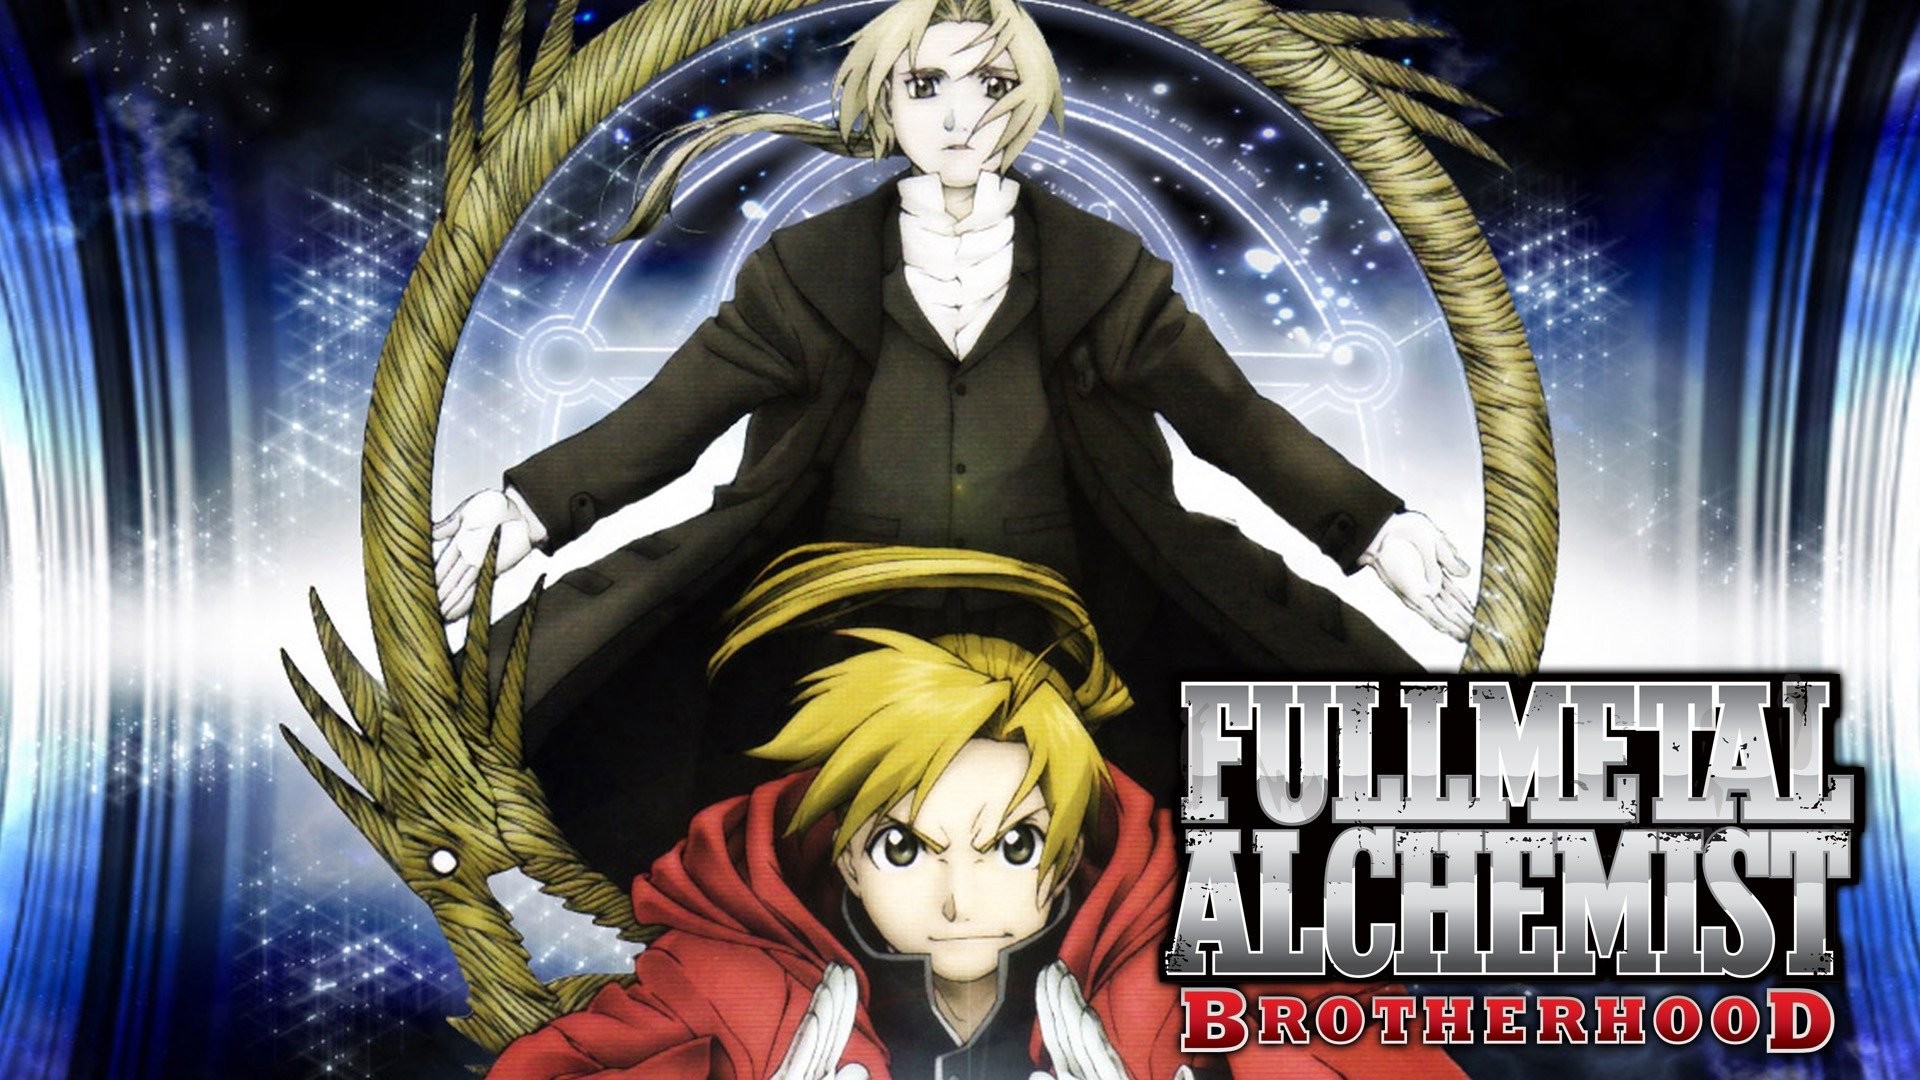 Fullmetal Alchemist (2003 anime) | Fullmetal Alchemist Wiki | Fandom